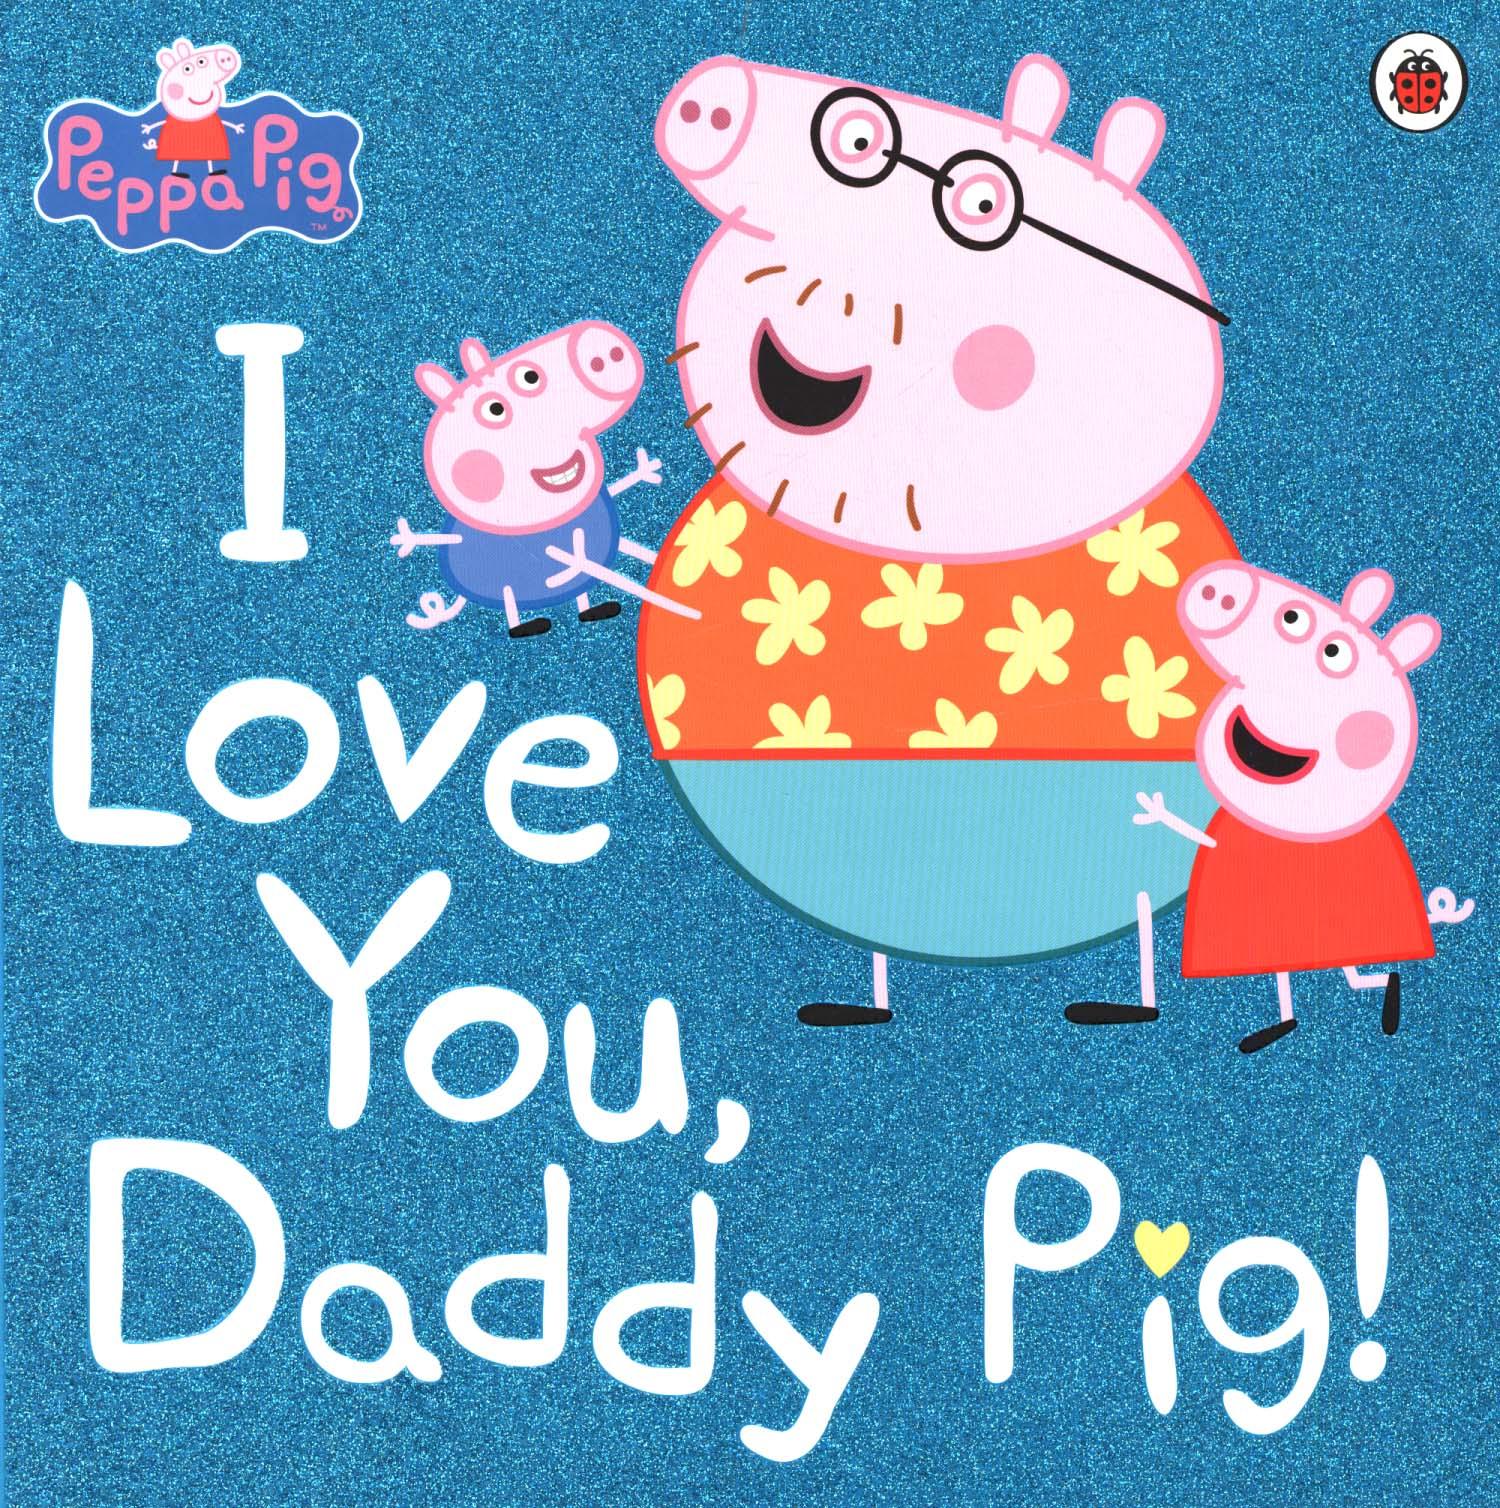 Peppa Pig: I Love You, Daddy Pig -  